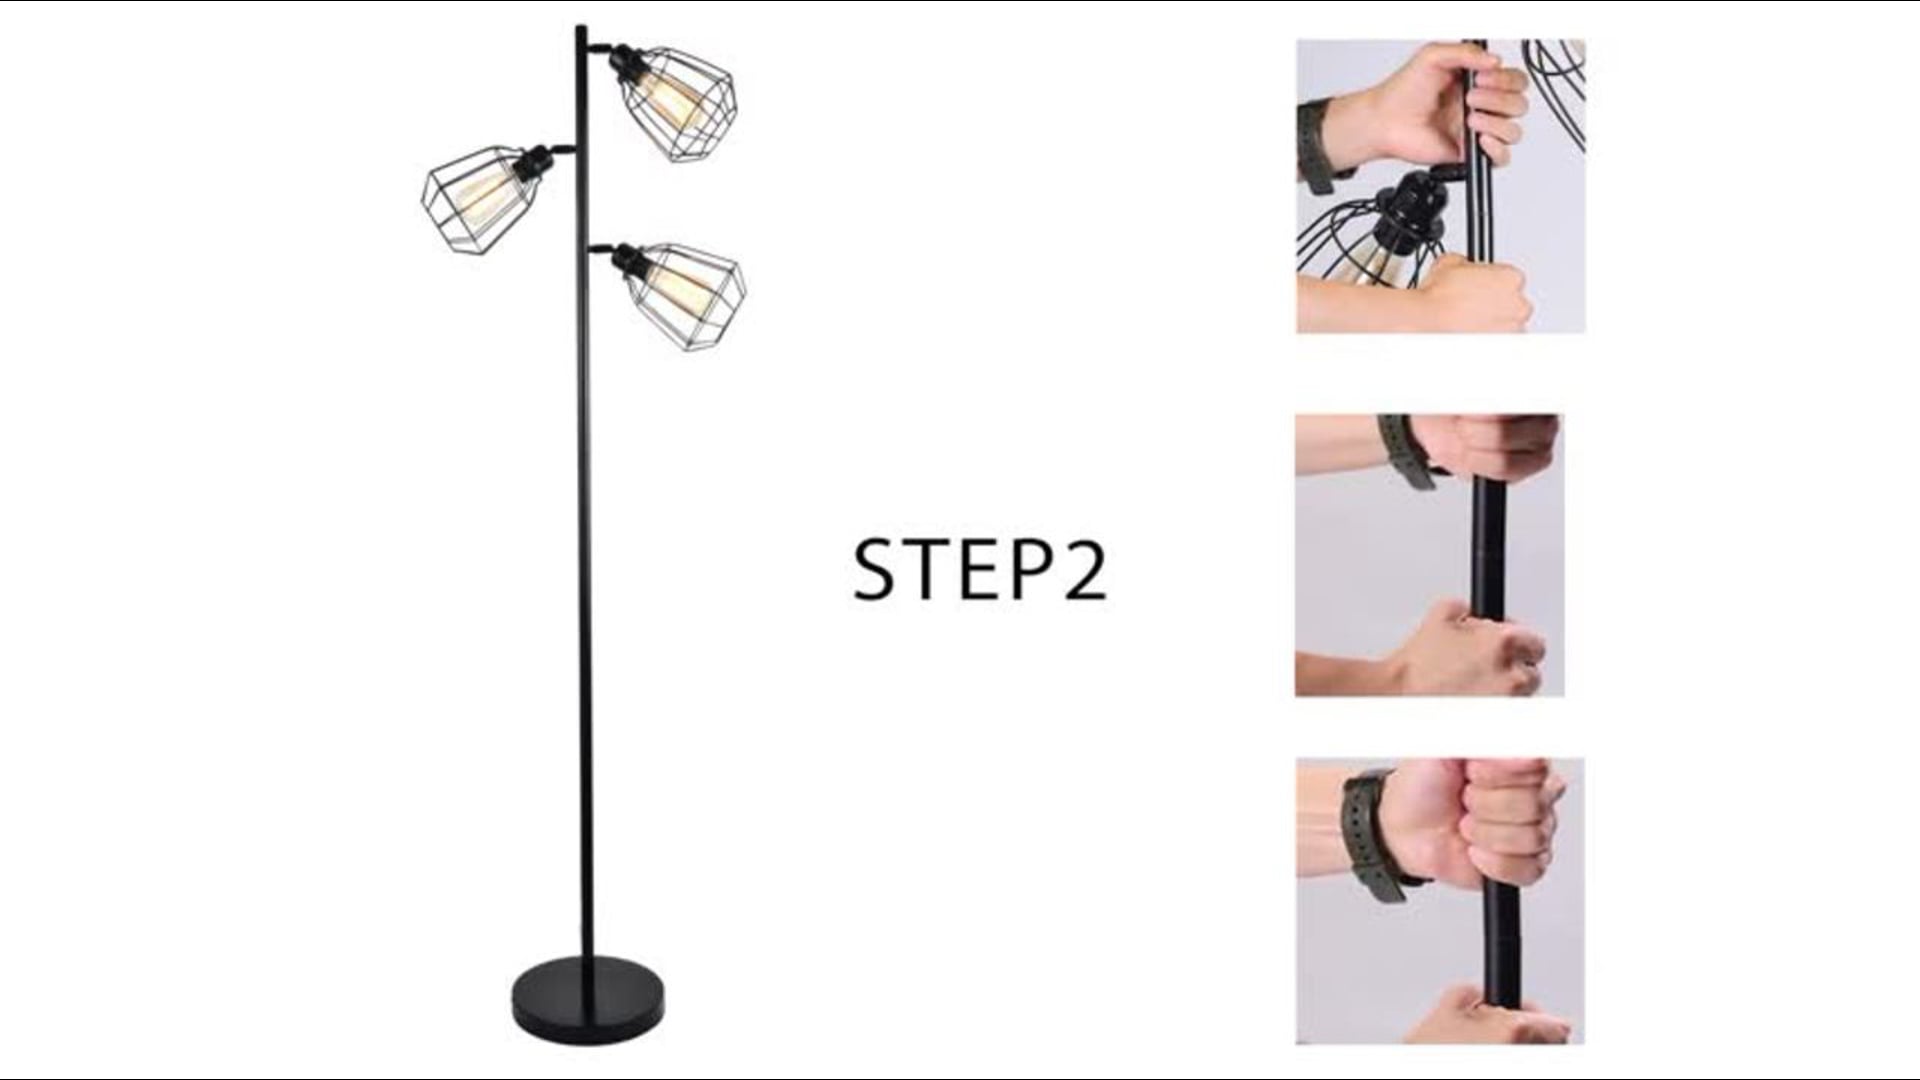 40W 3-Light Floor Uplight Lamp With Metal Shade, ETL-Listed